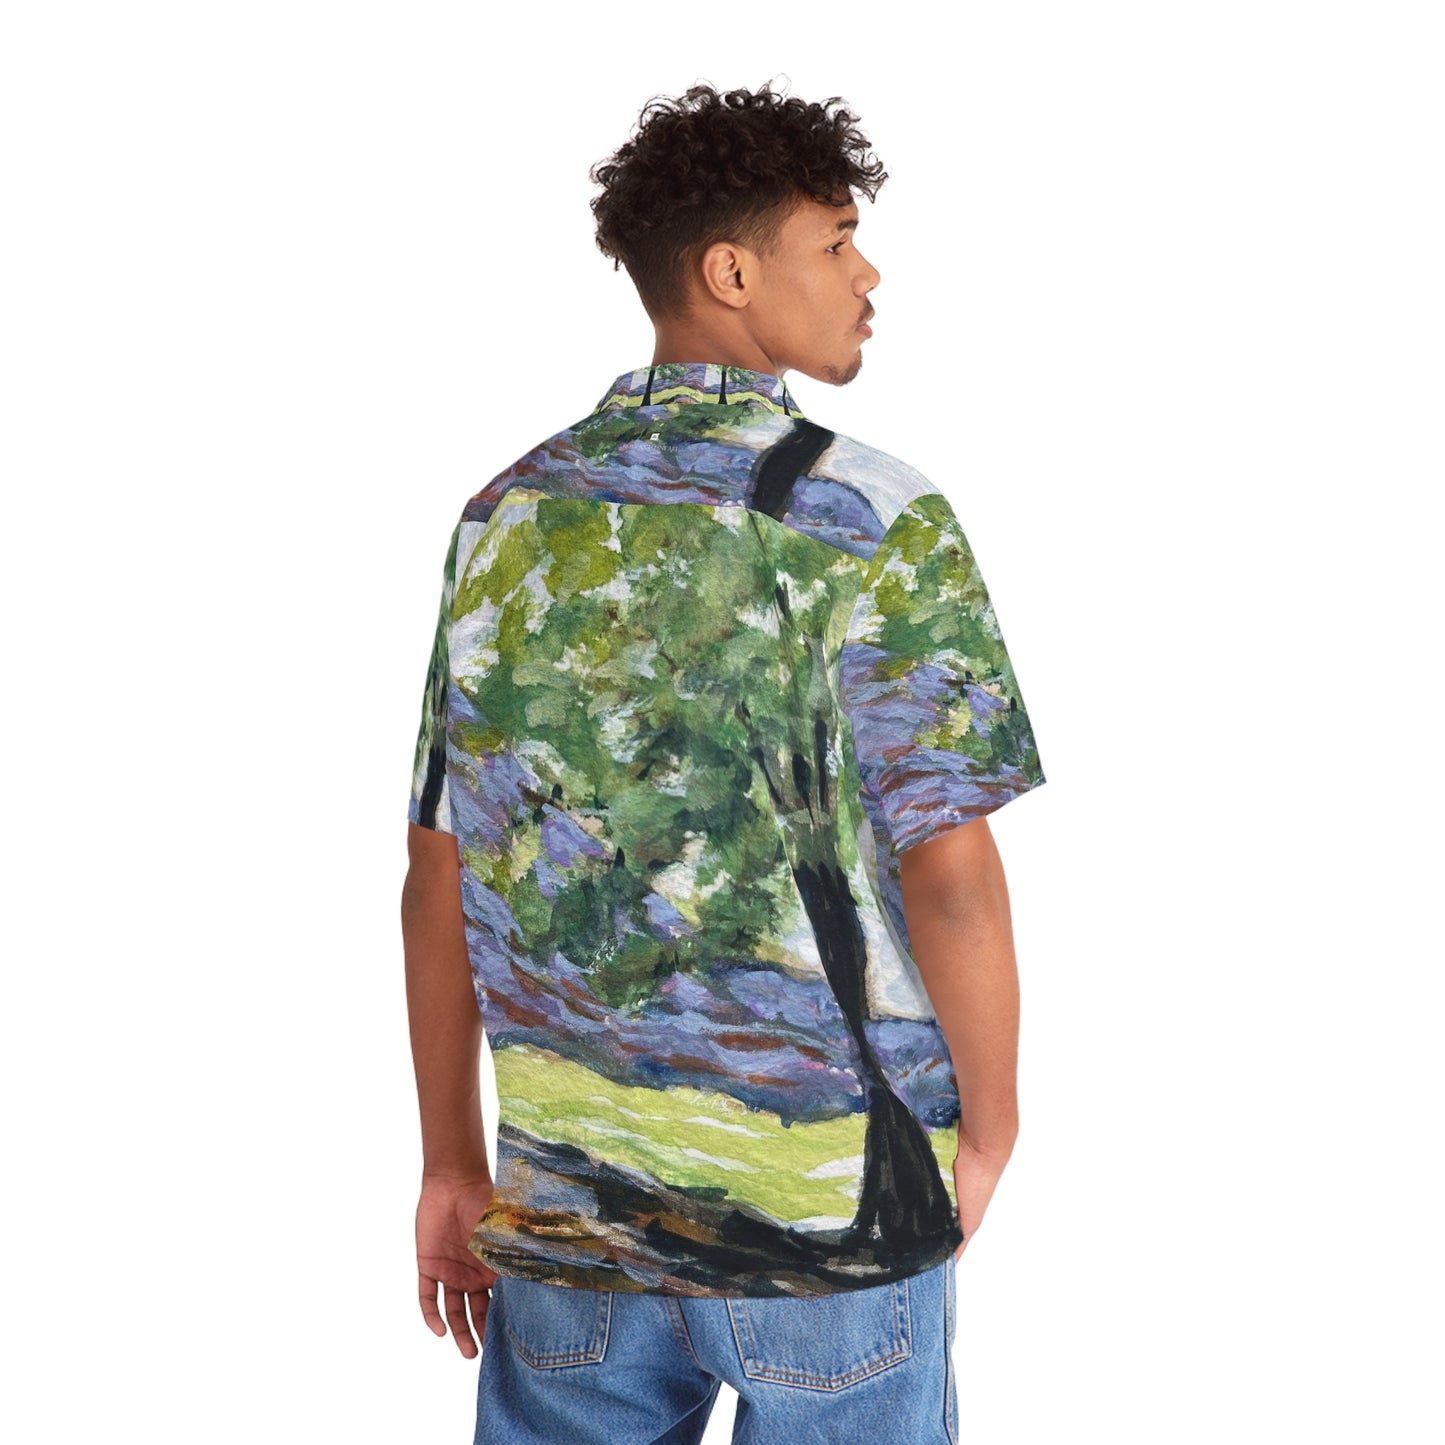 Cottonwood Tree Men's Hawaiian Shirt